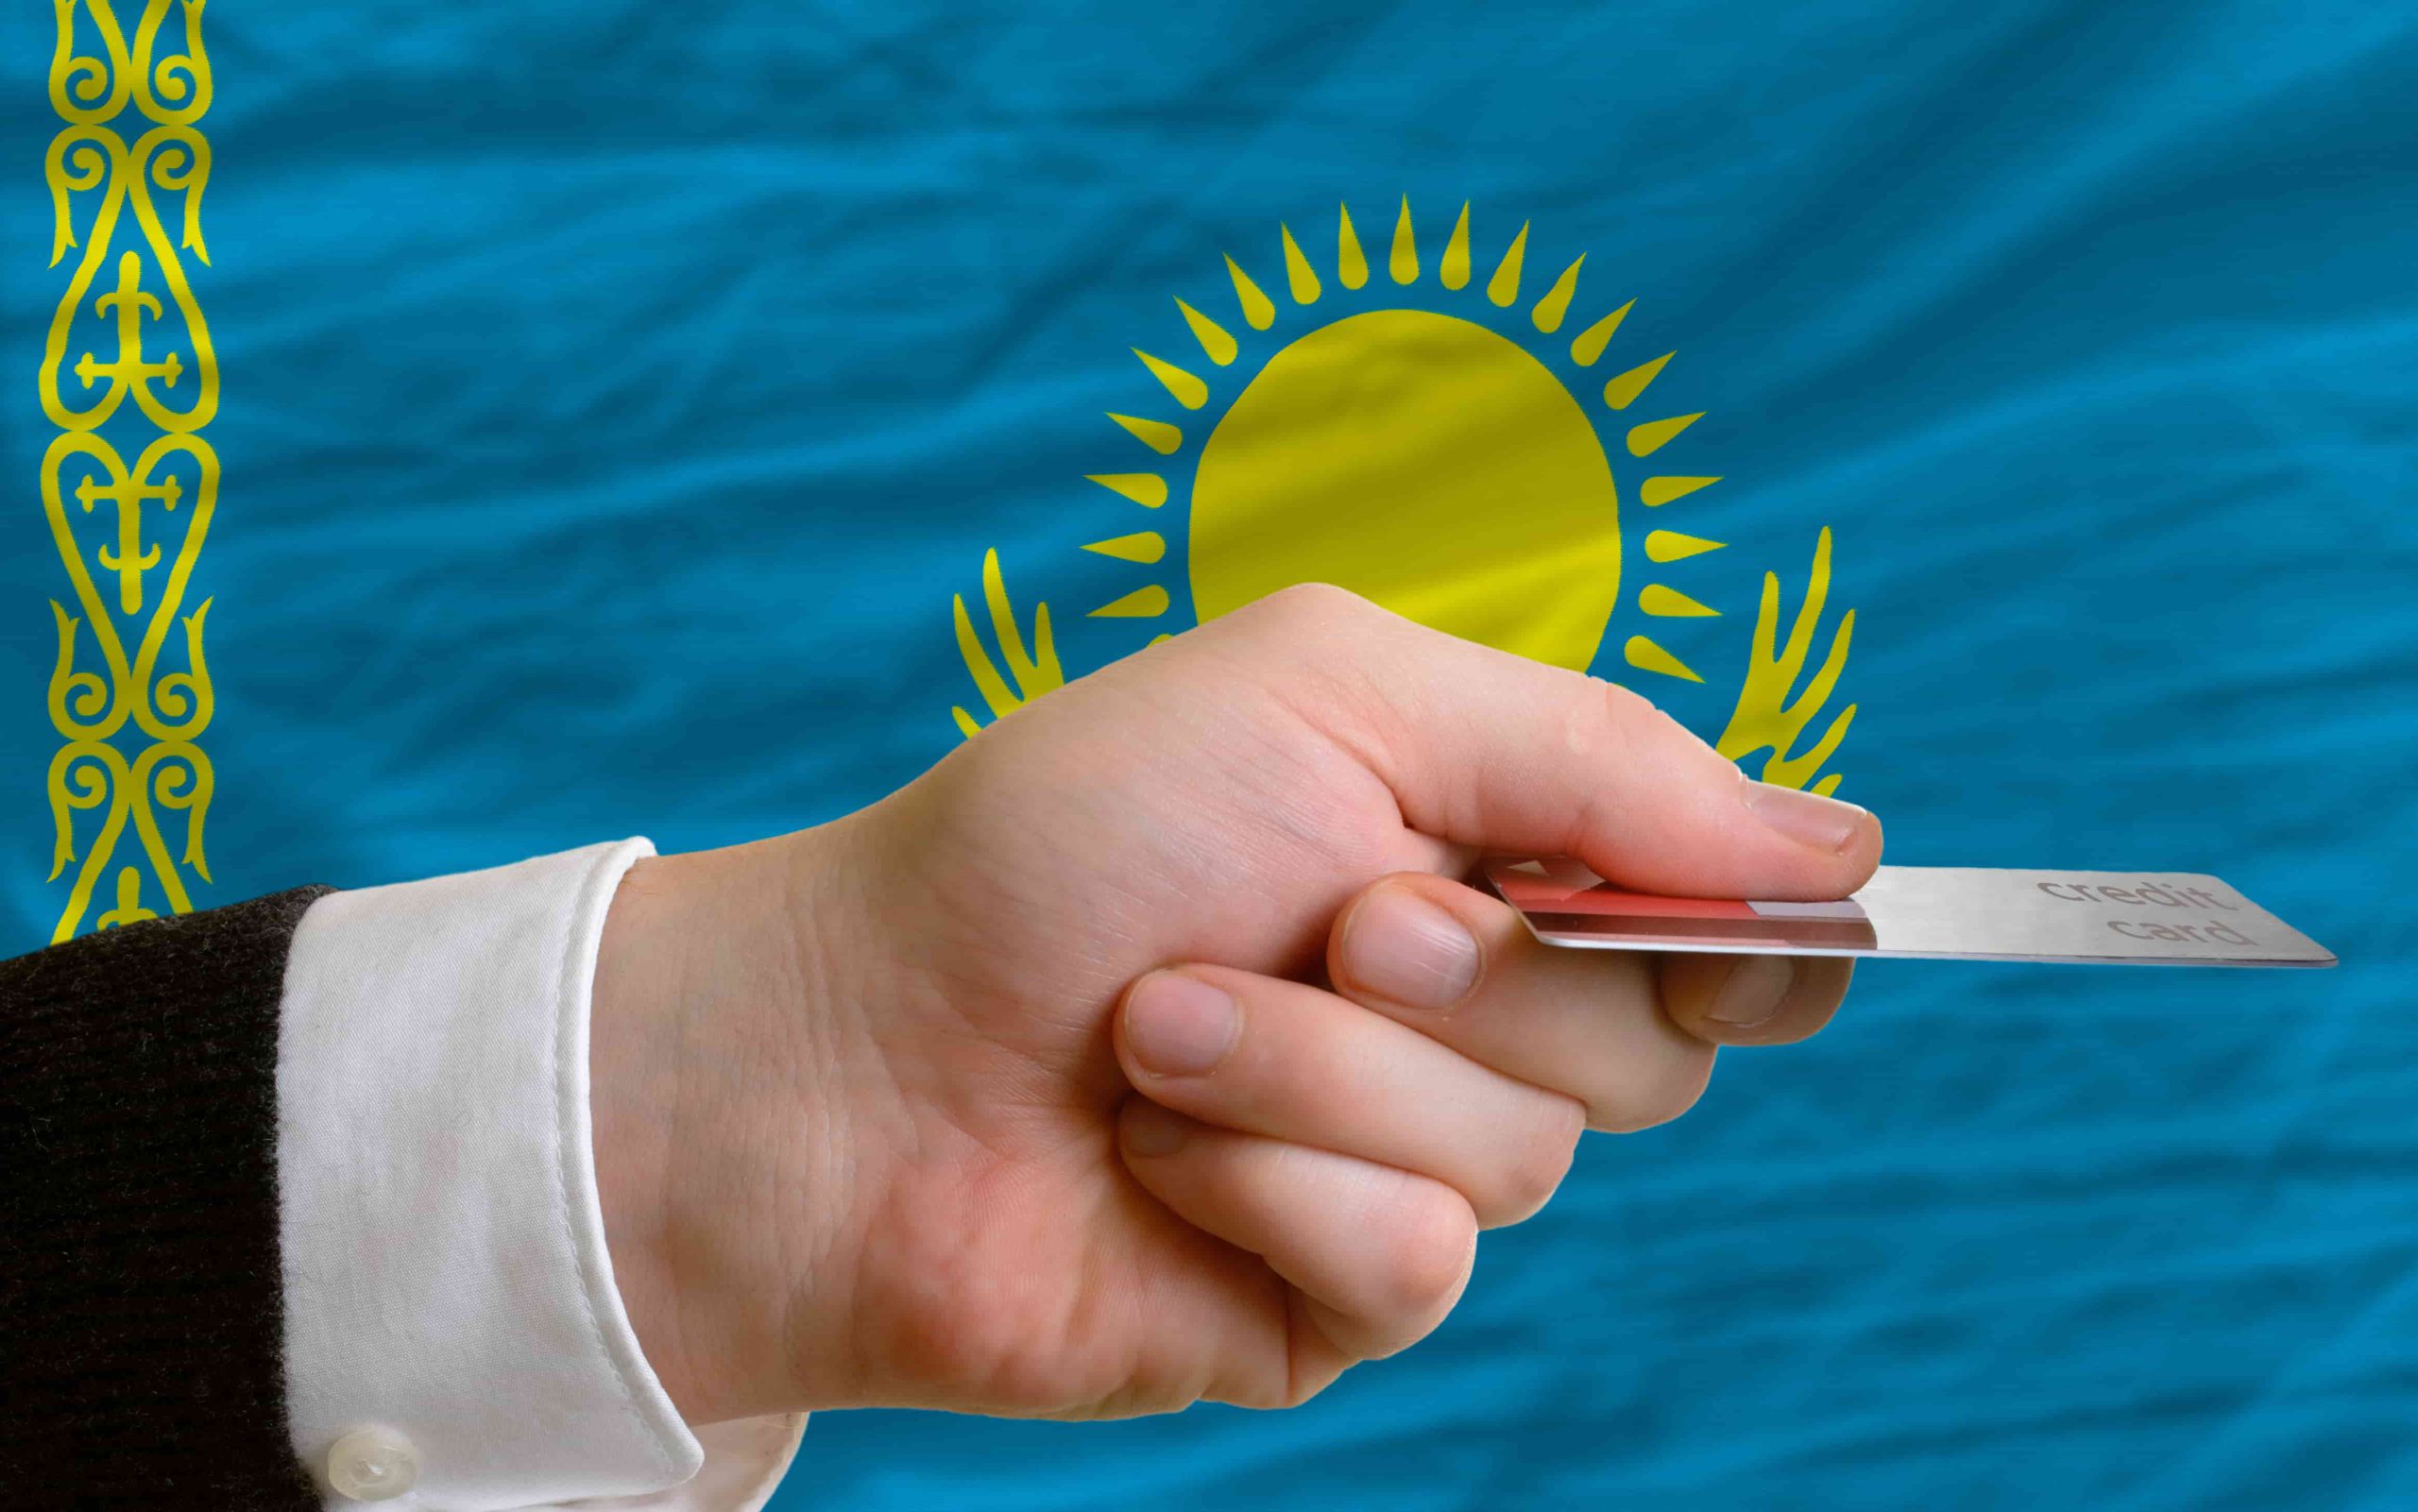 ТурбоМани онлайн займы в Казахстане на карту